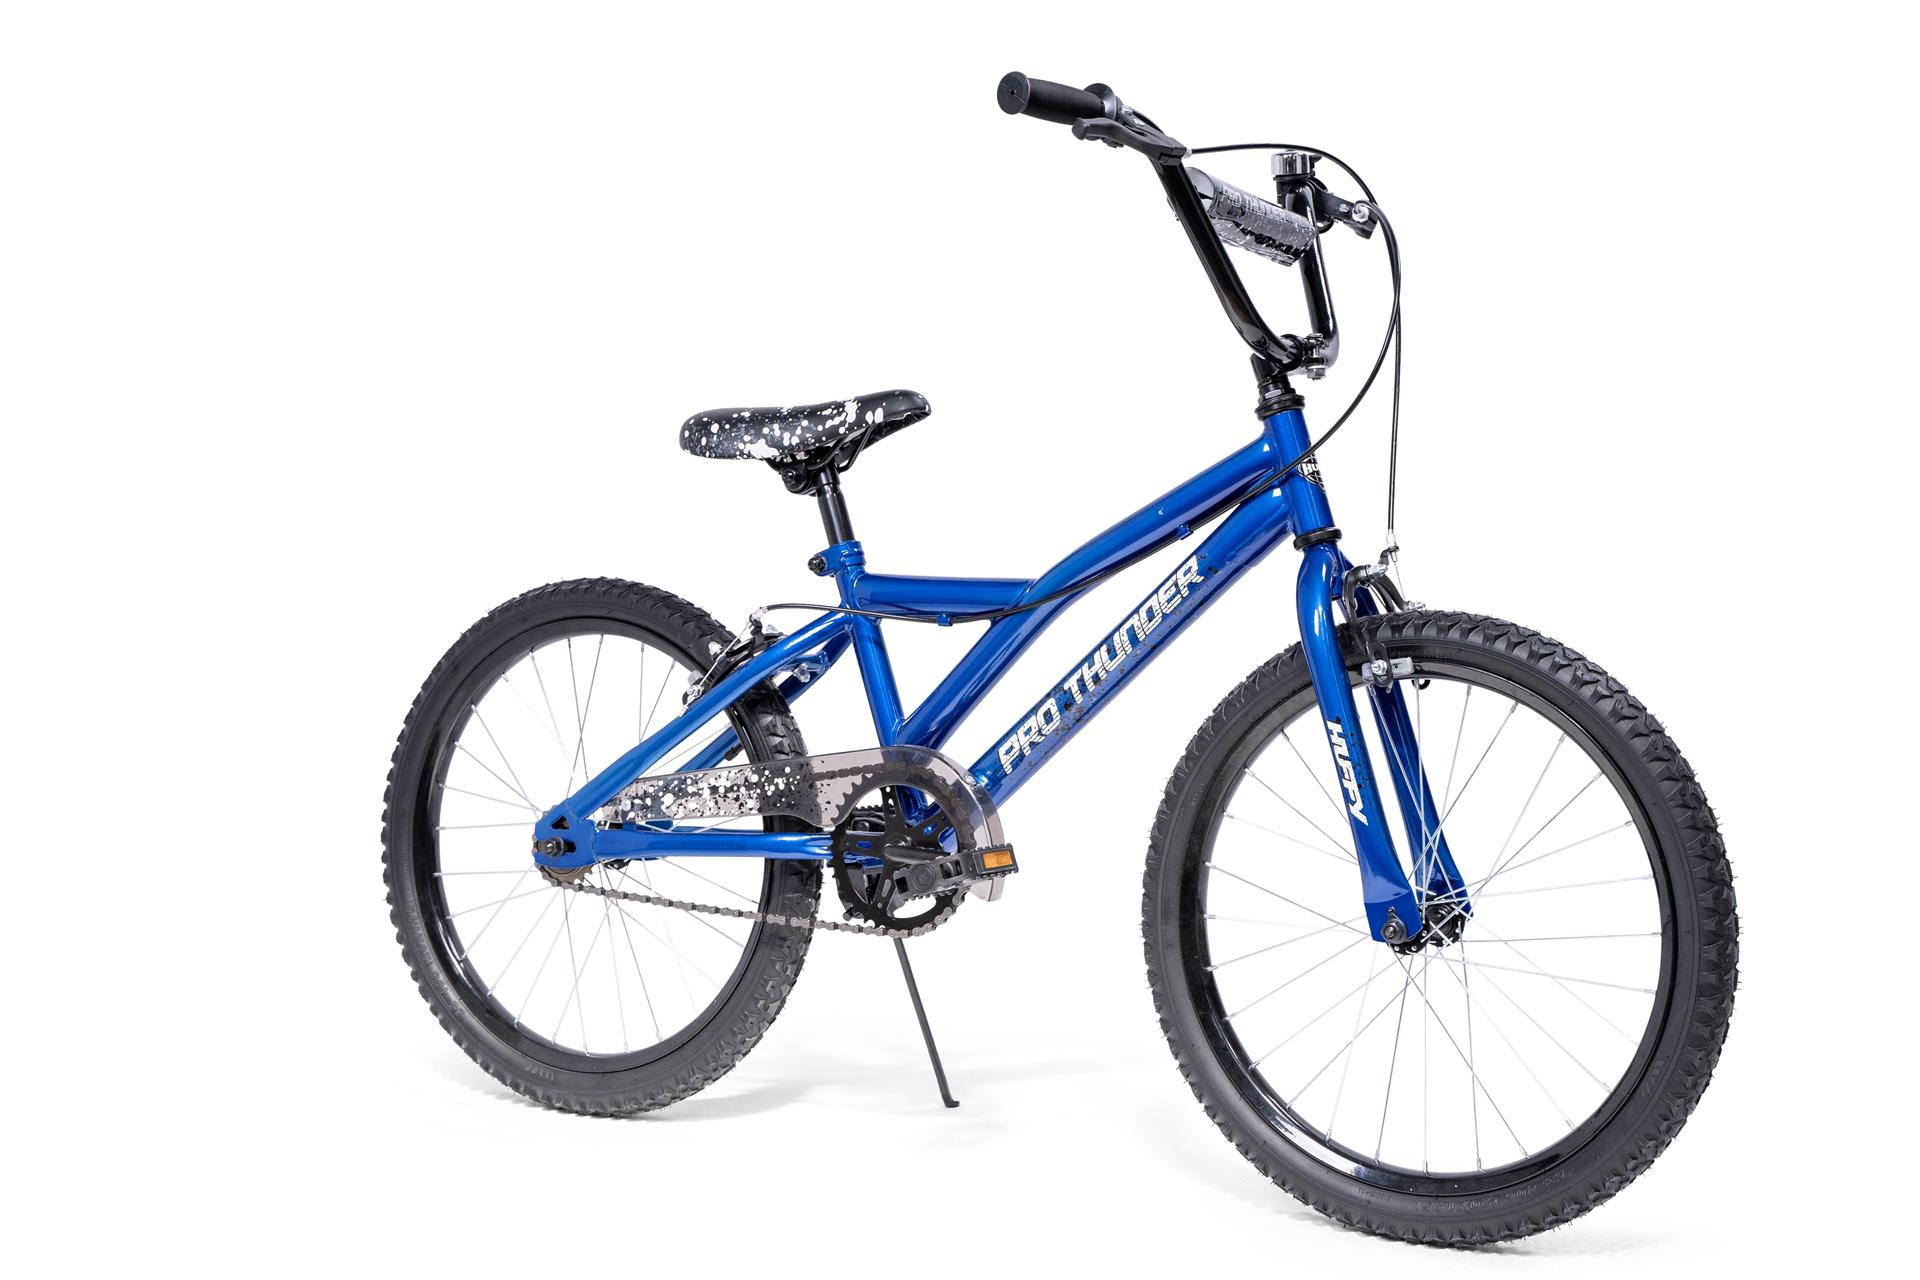 Huffy Pro Thunder 20" Детский велосипед, Королевский синий